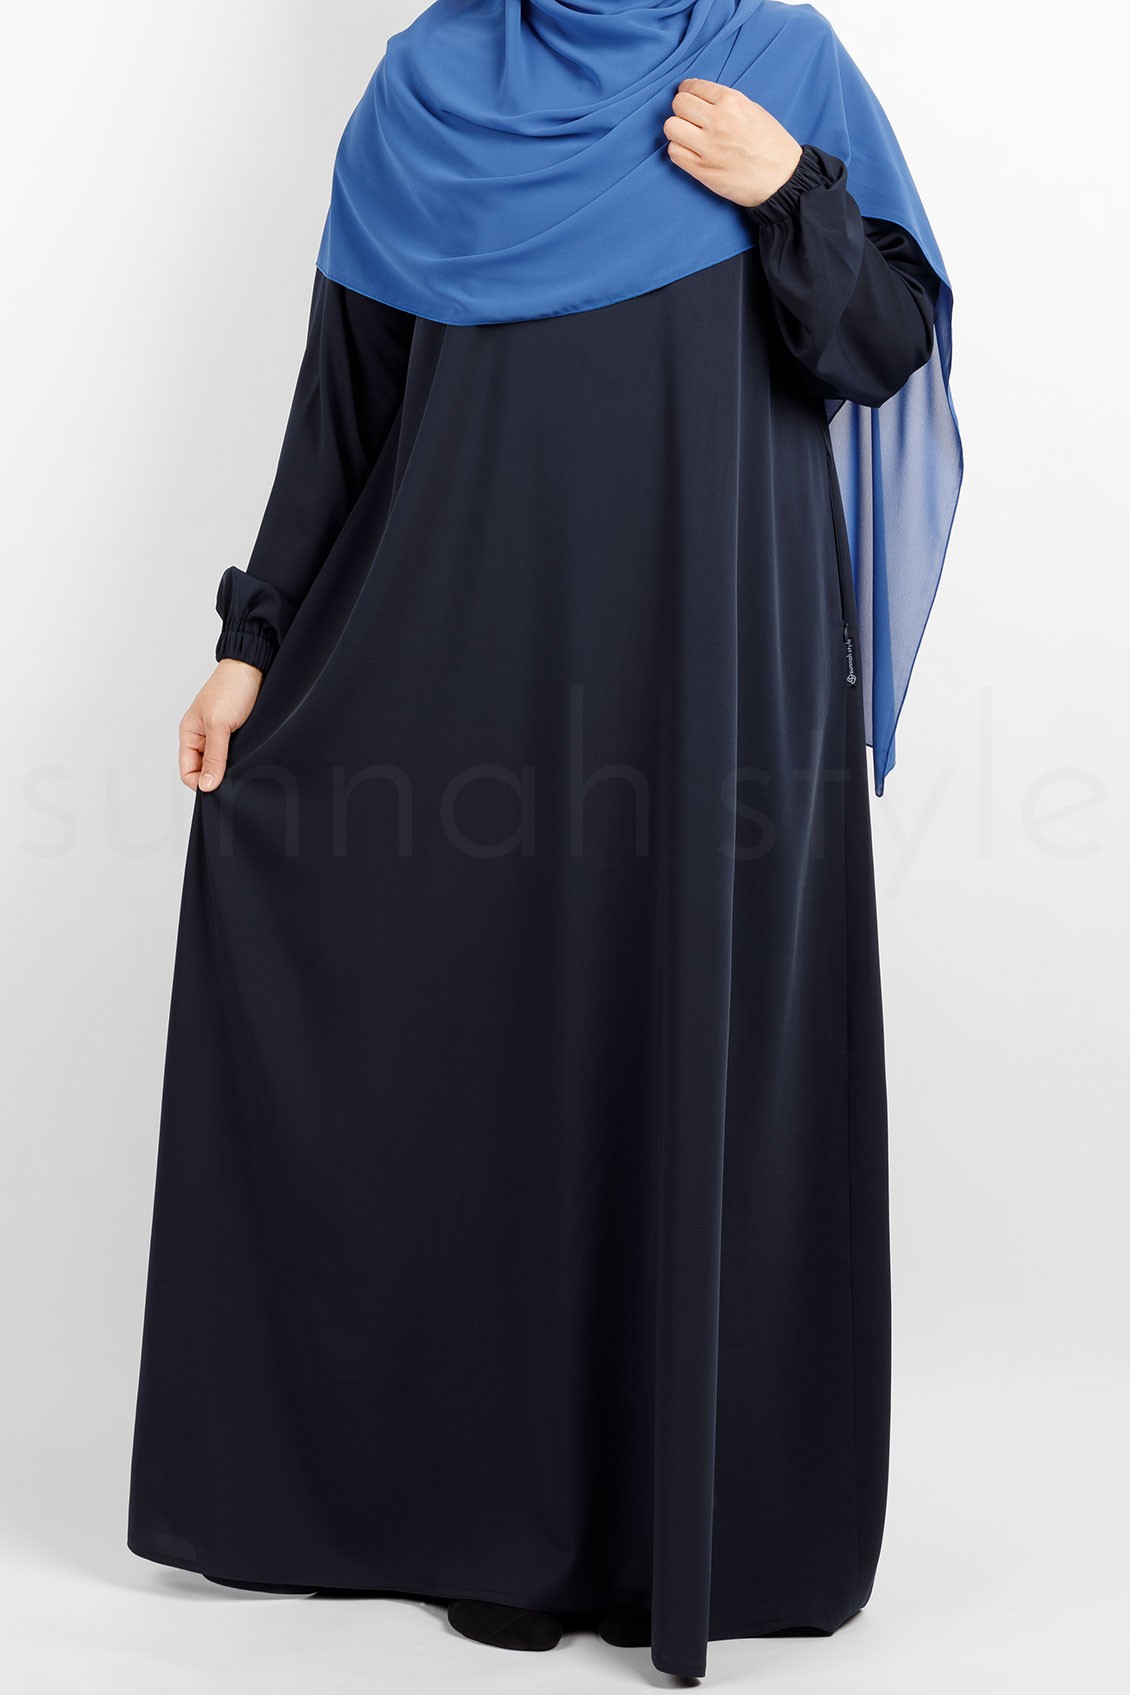 Sunnah Style Versa Stretch Cuff Abaya Navy Blue